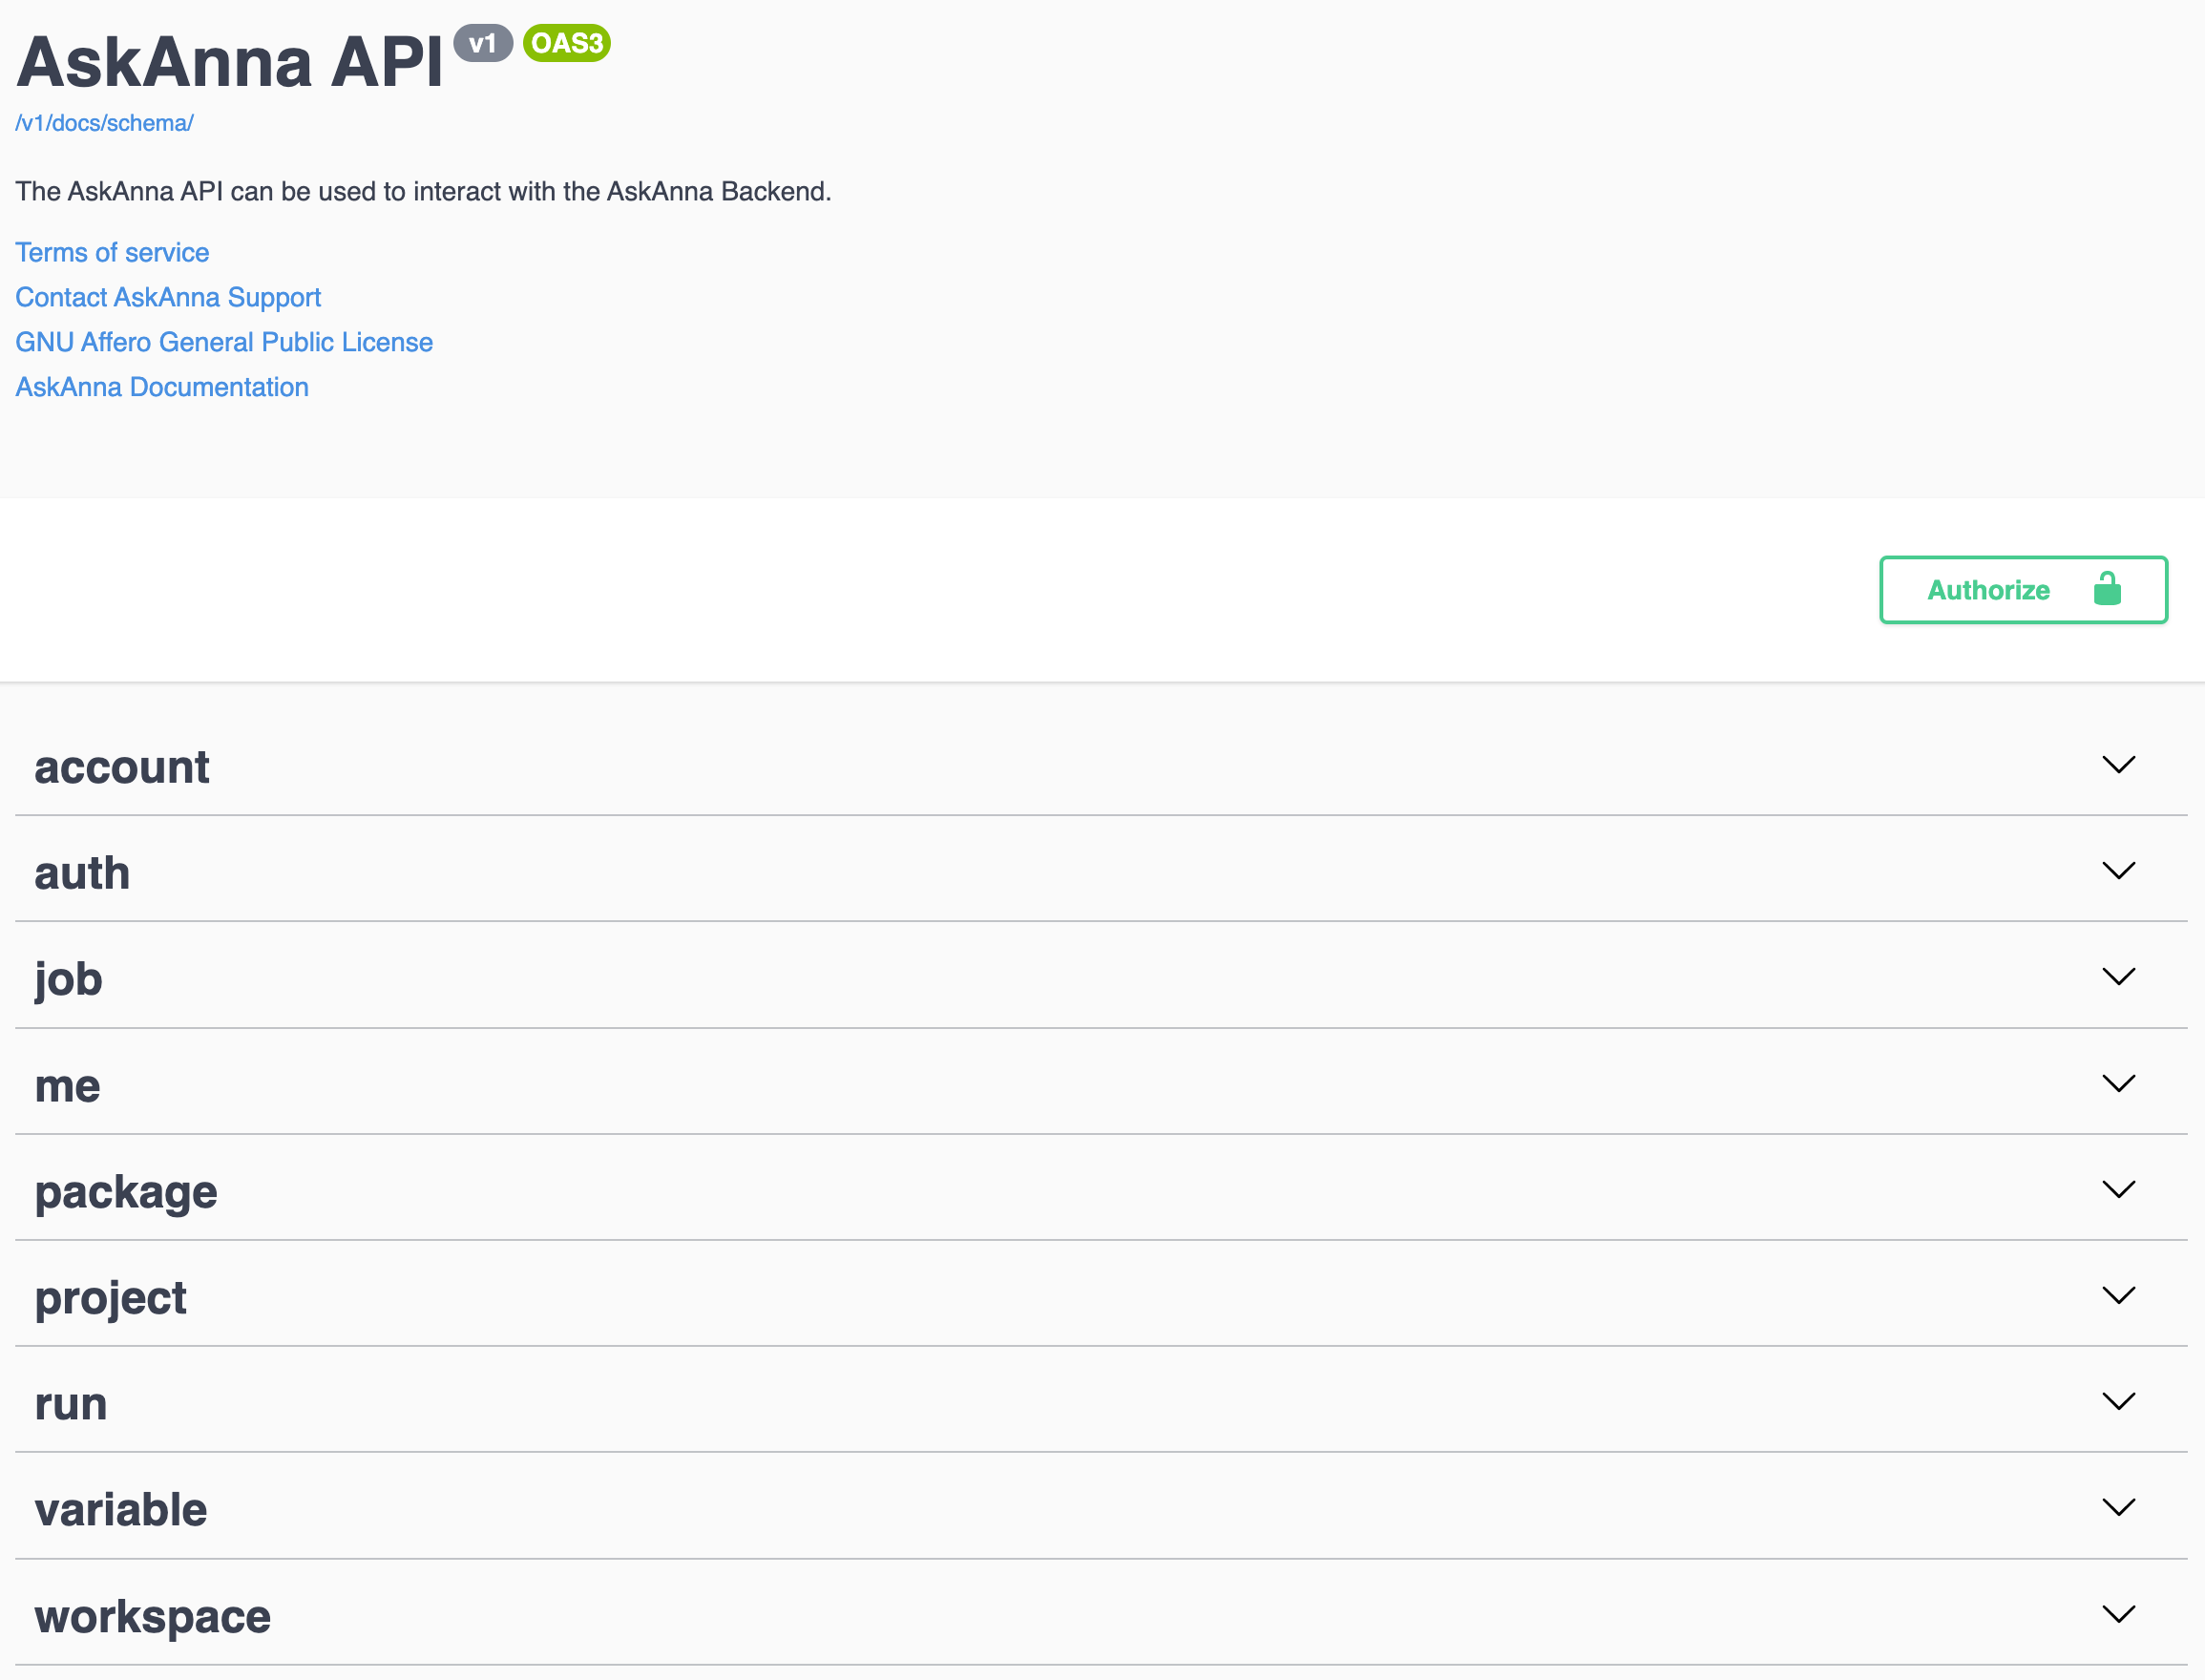 The AskAnna API docs